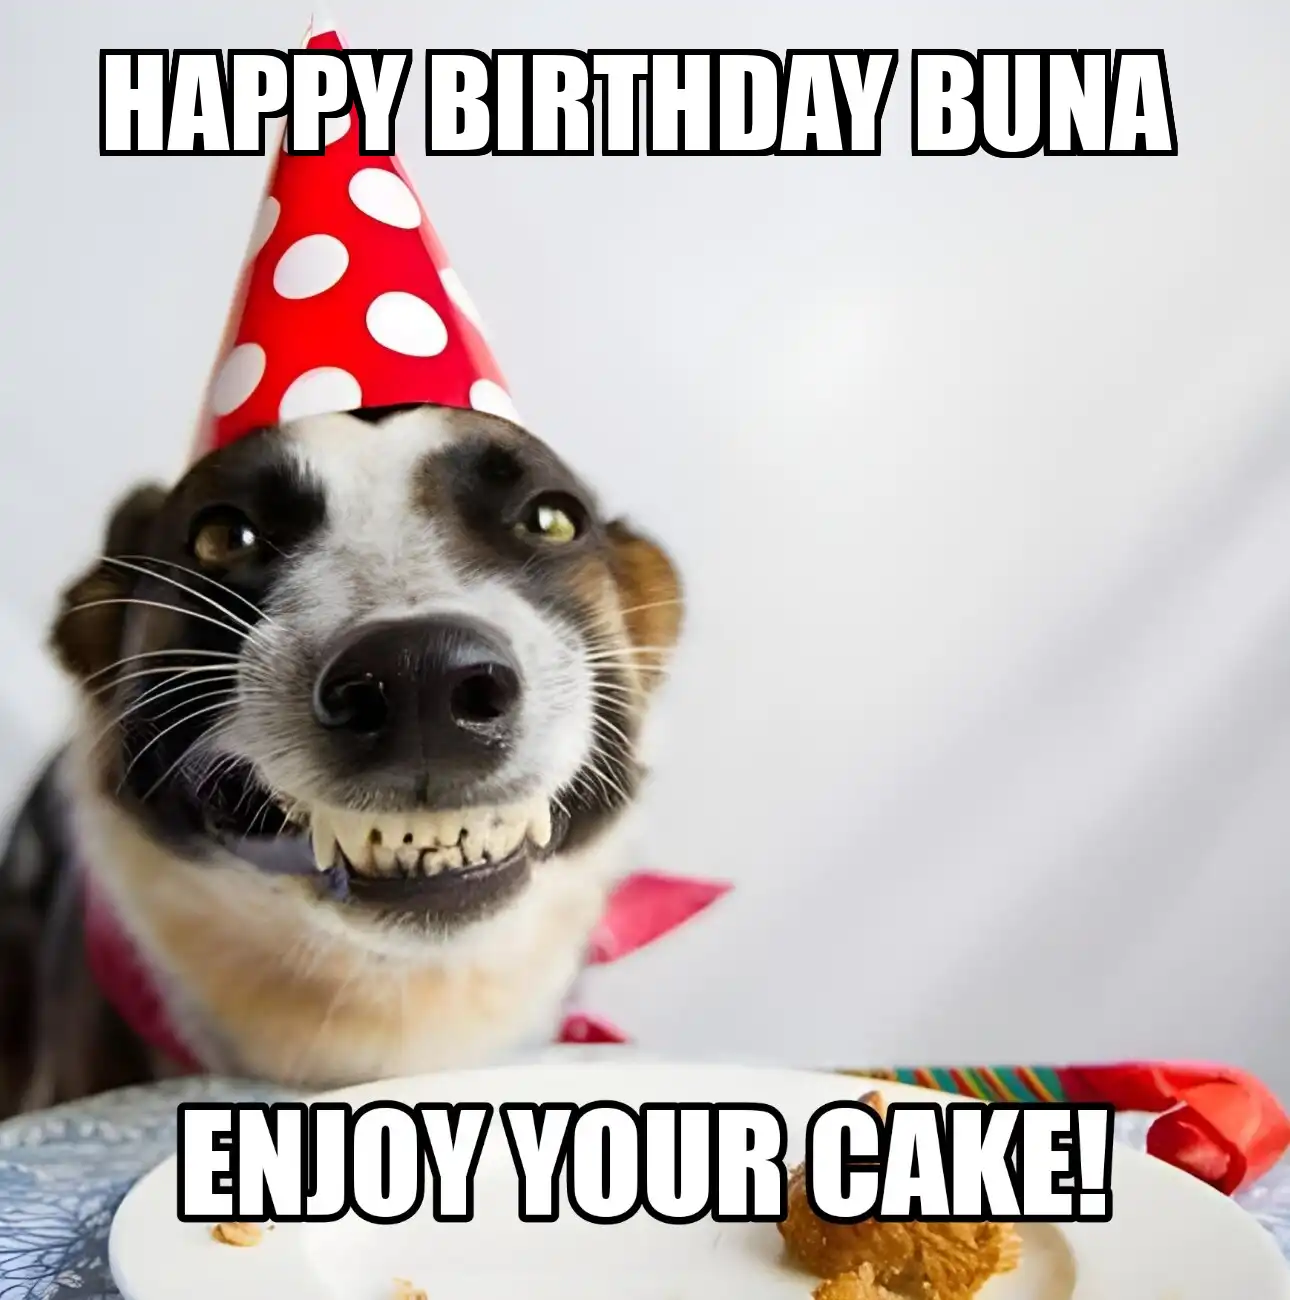 Happy Birthday Buna Enjoy Your Cake Dog Meme